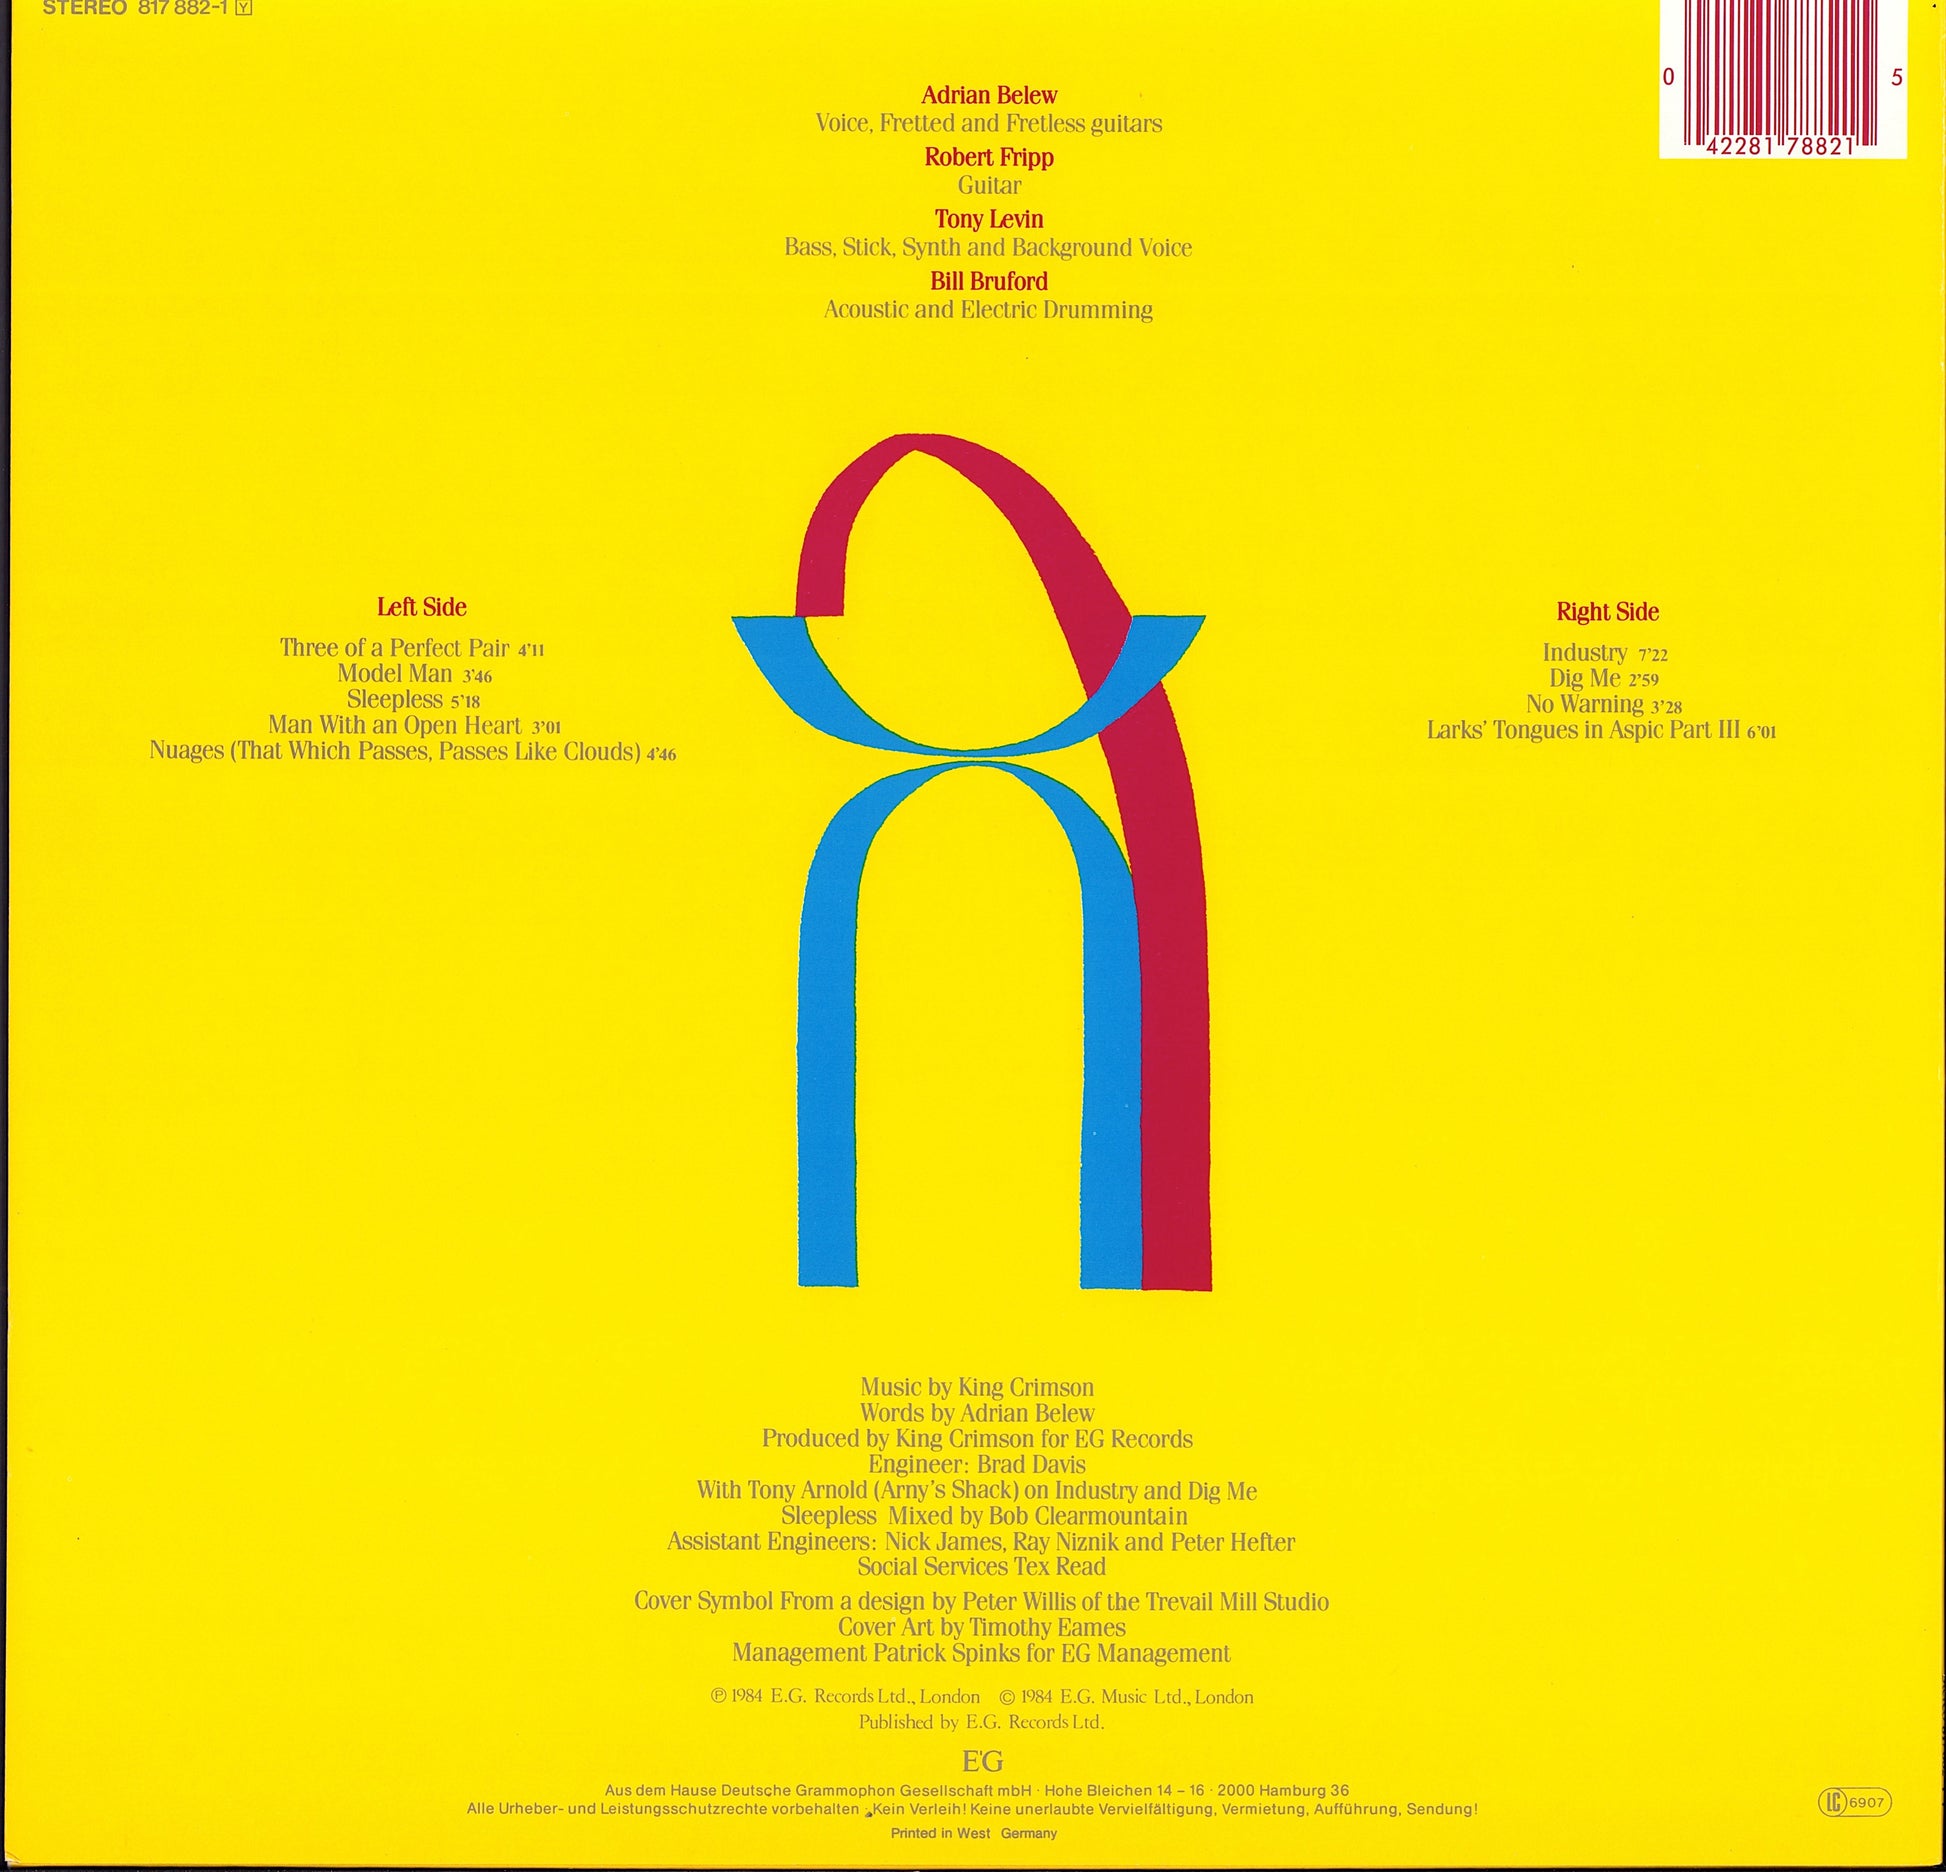 King Crimson ‎- Three Of A Perfect Pair Vinyl LP